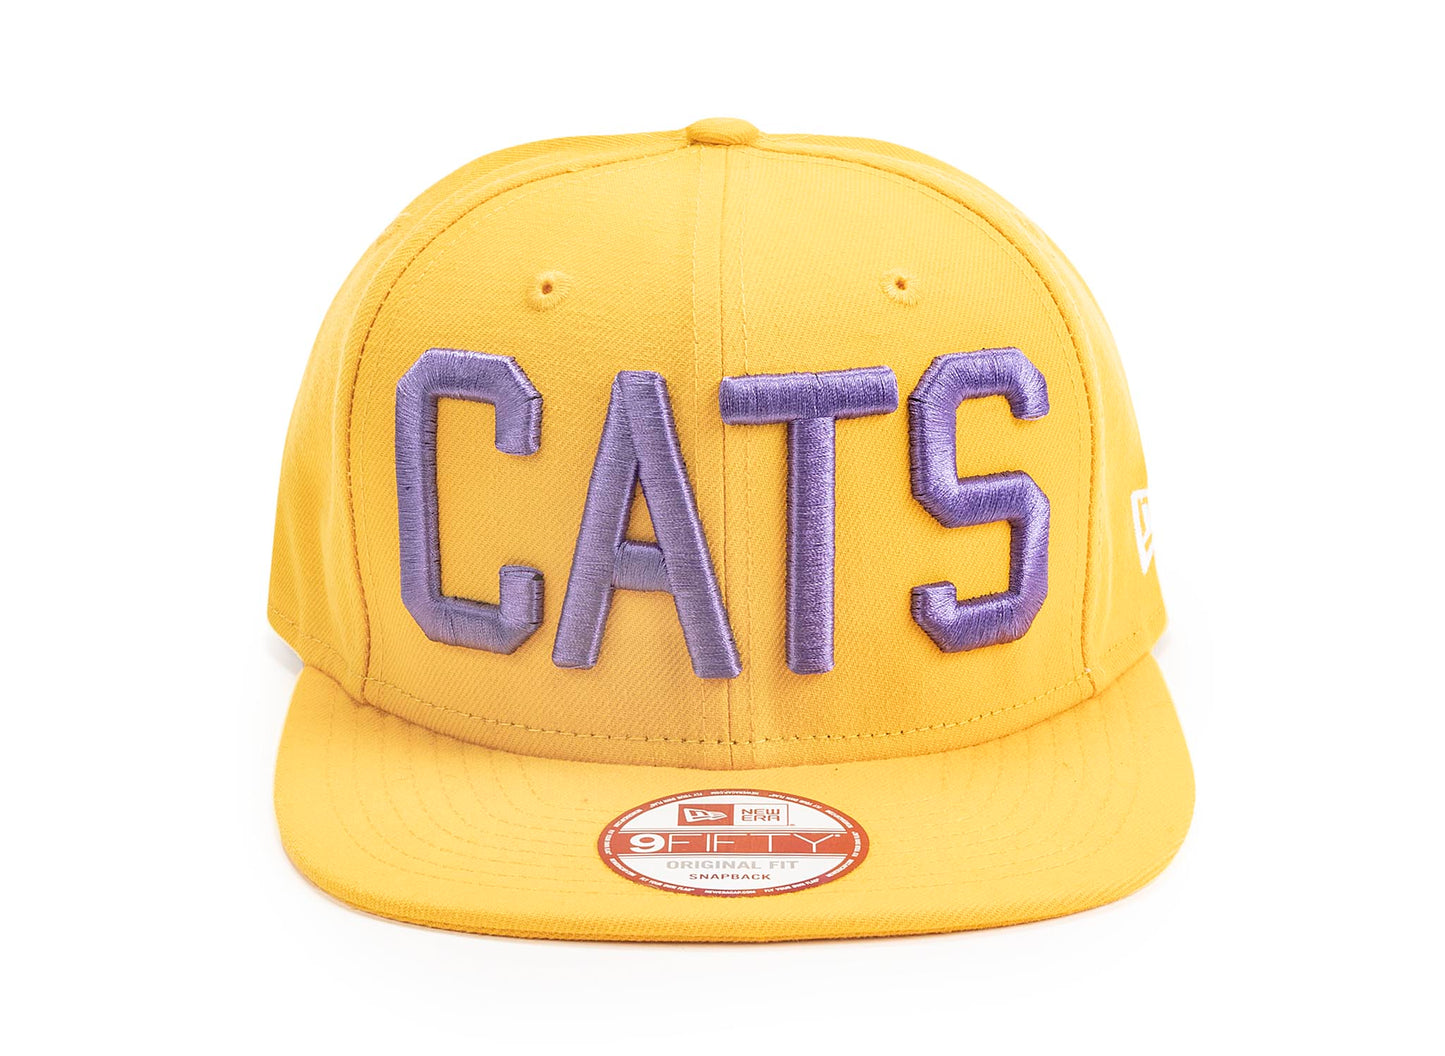 Oneness OG Cats Snapback Hat 'Lakers'